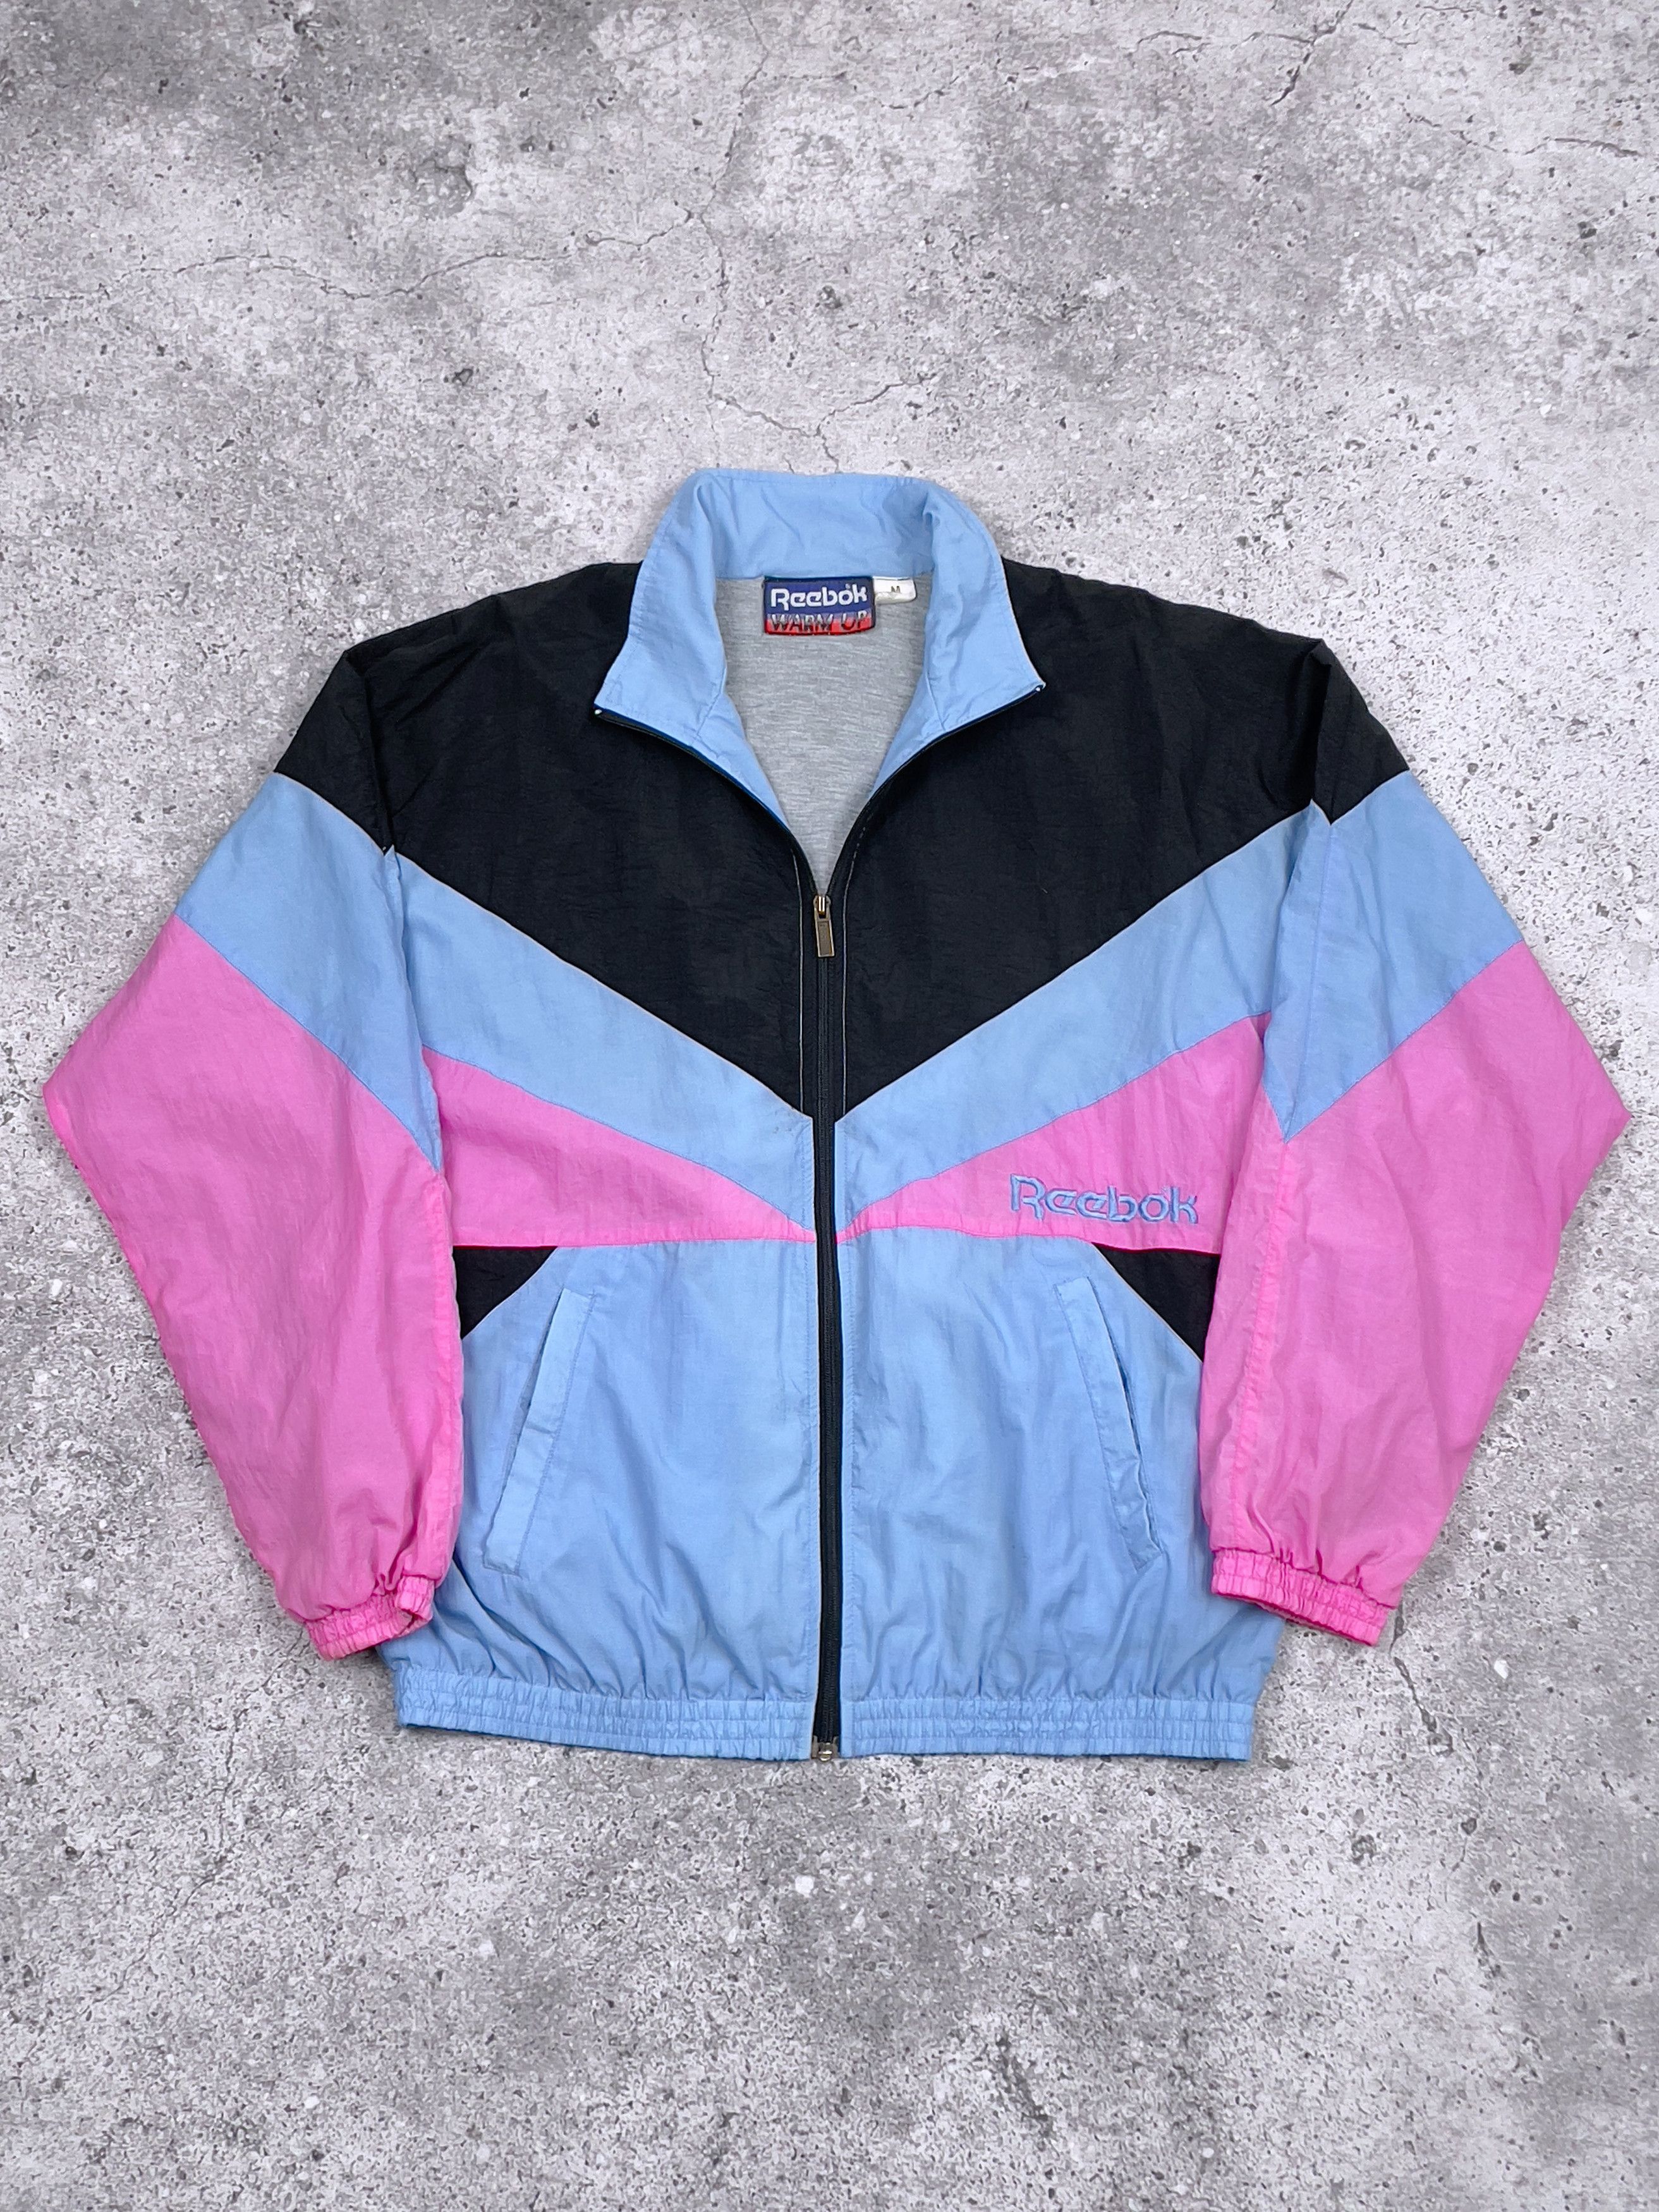 Vintage 80s Reebok Nylon Track Jacket Set Jacket + Pants Size US M / EU 48-50 / 2 - 2 Preview